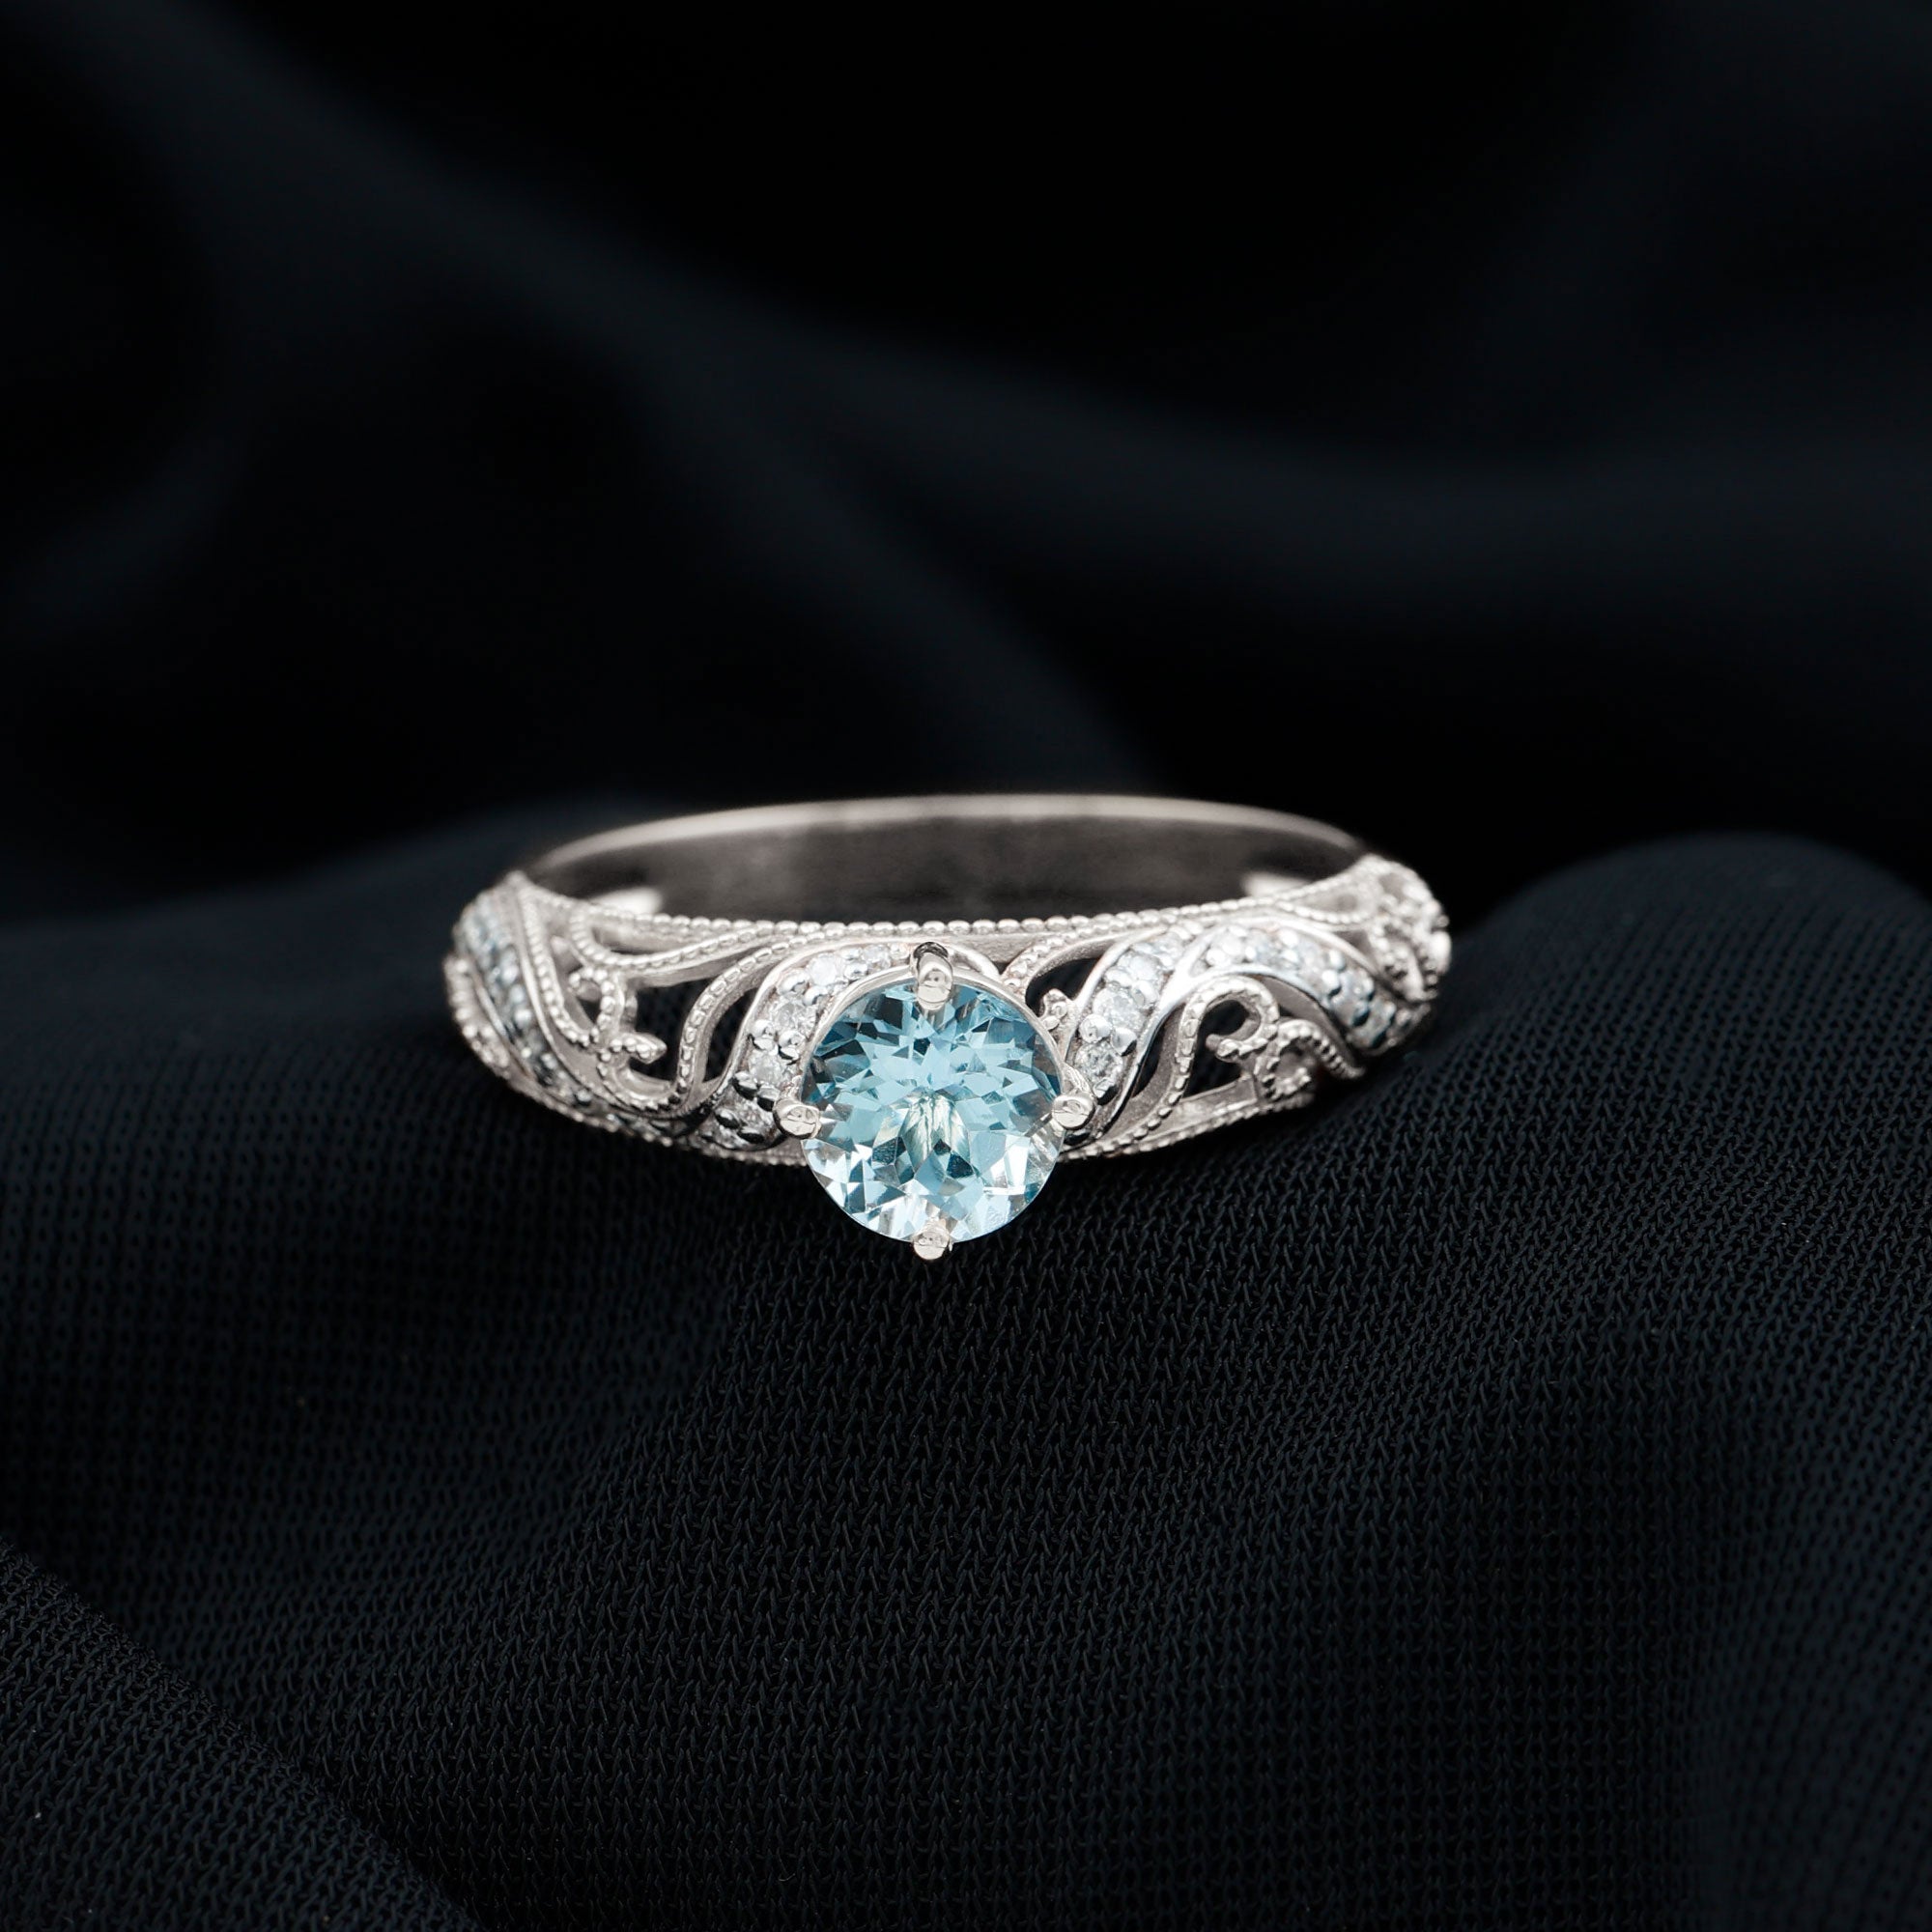 1 CT Vintage Engagement Ring with Aquamarine and Diamond Aquamarine - ( AAA ) - Quality - Rosec Jewels